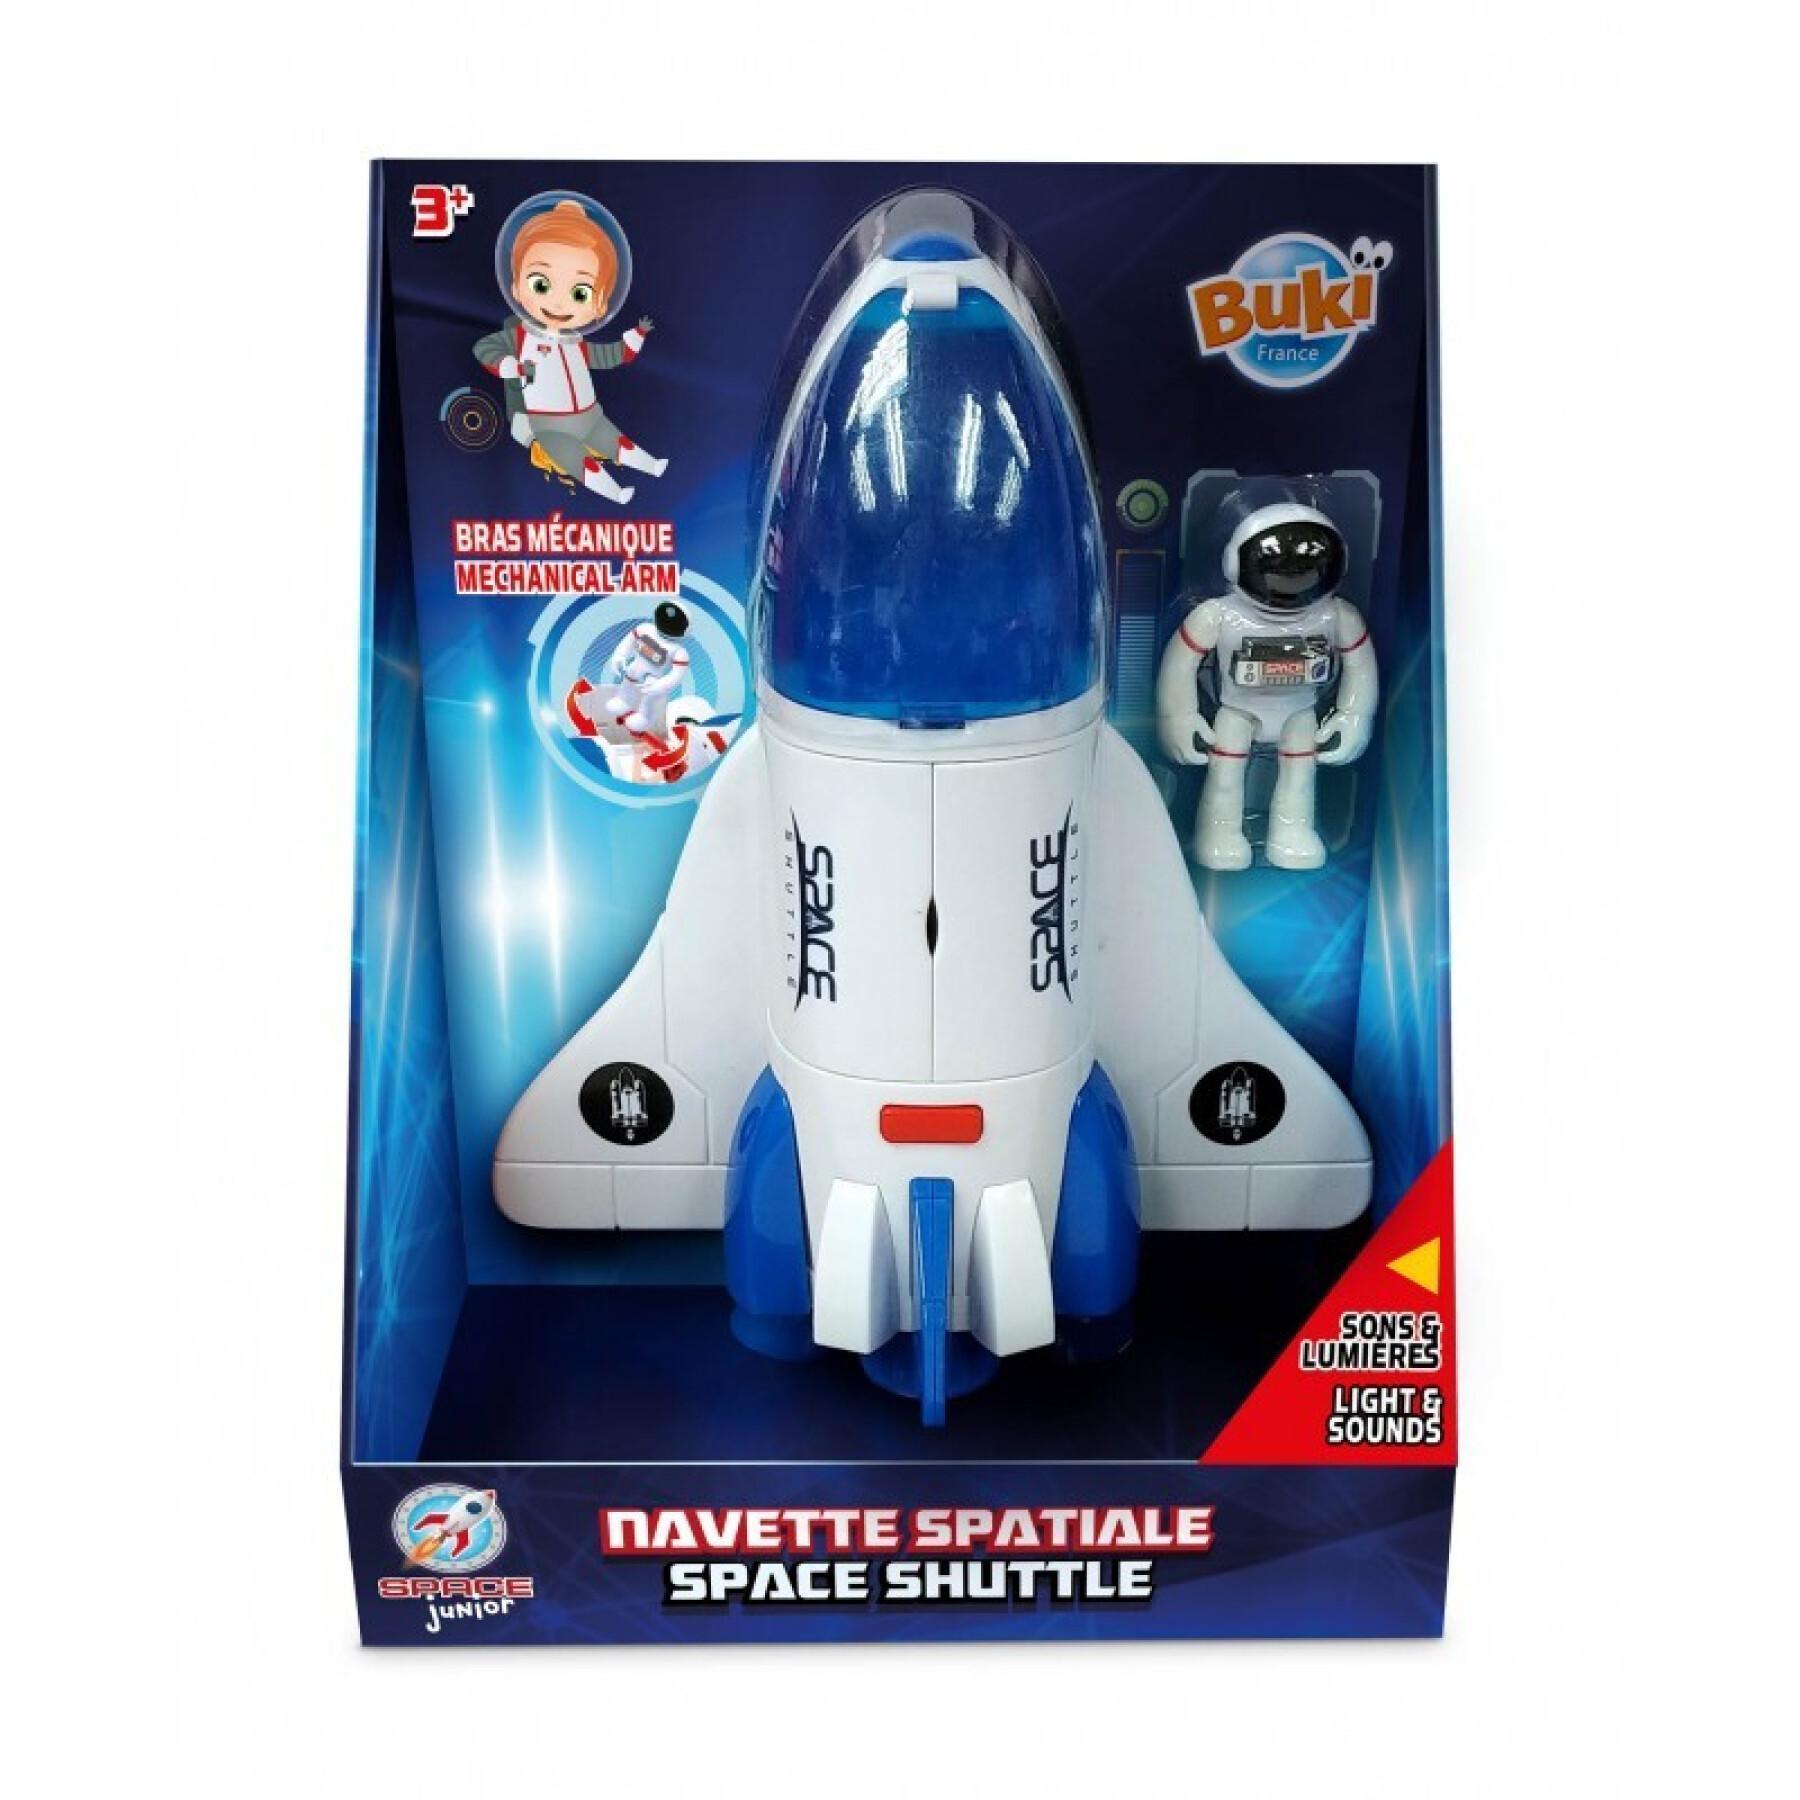 Space shuttle light and sound construction set Buki